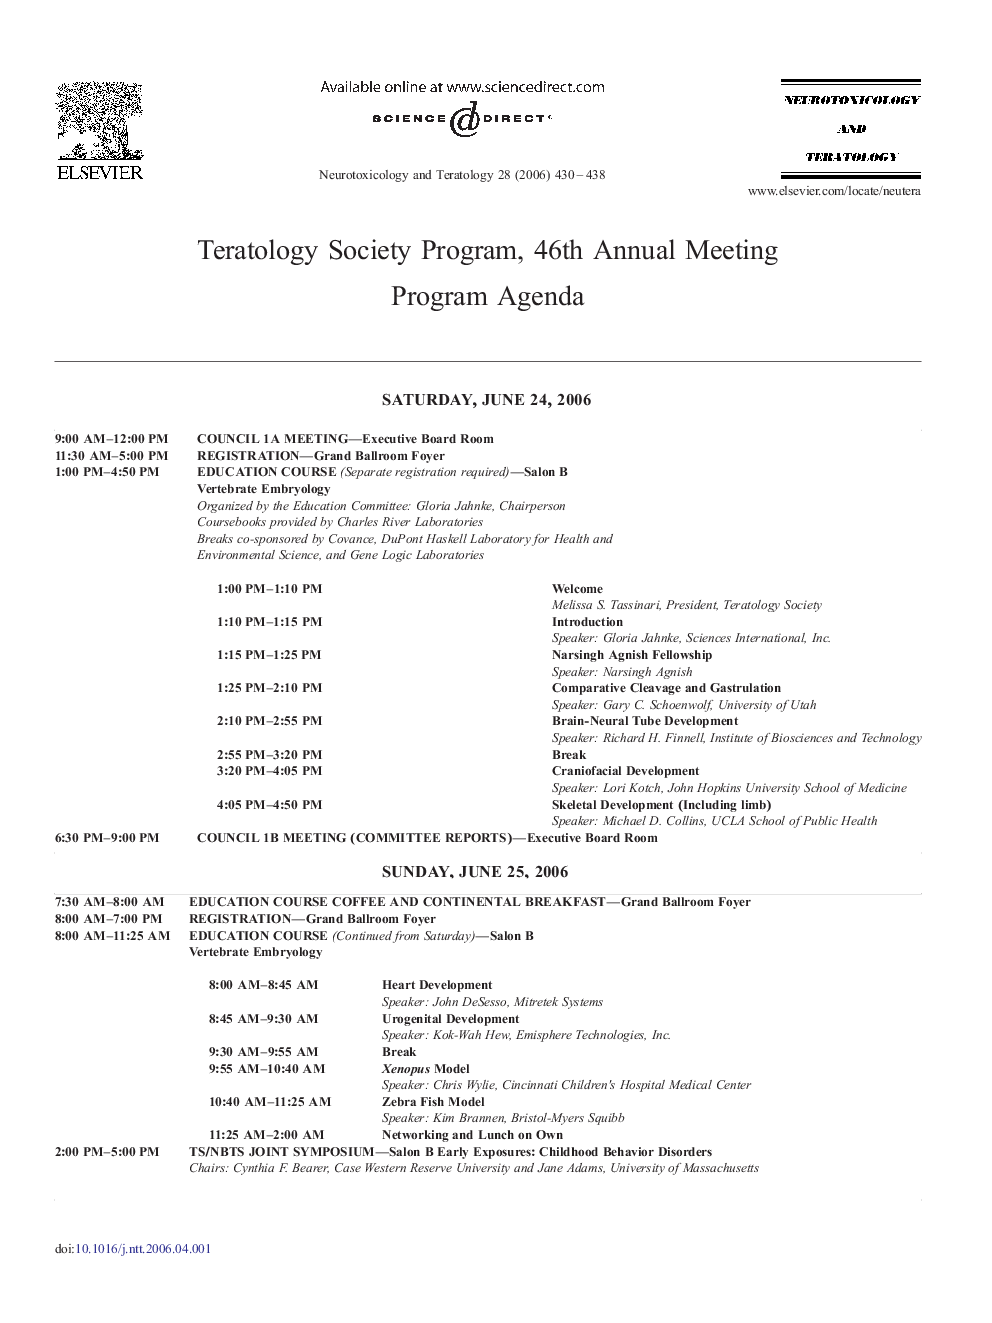 Teratology Society Program, 46th Annual Meeting Program Agenda